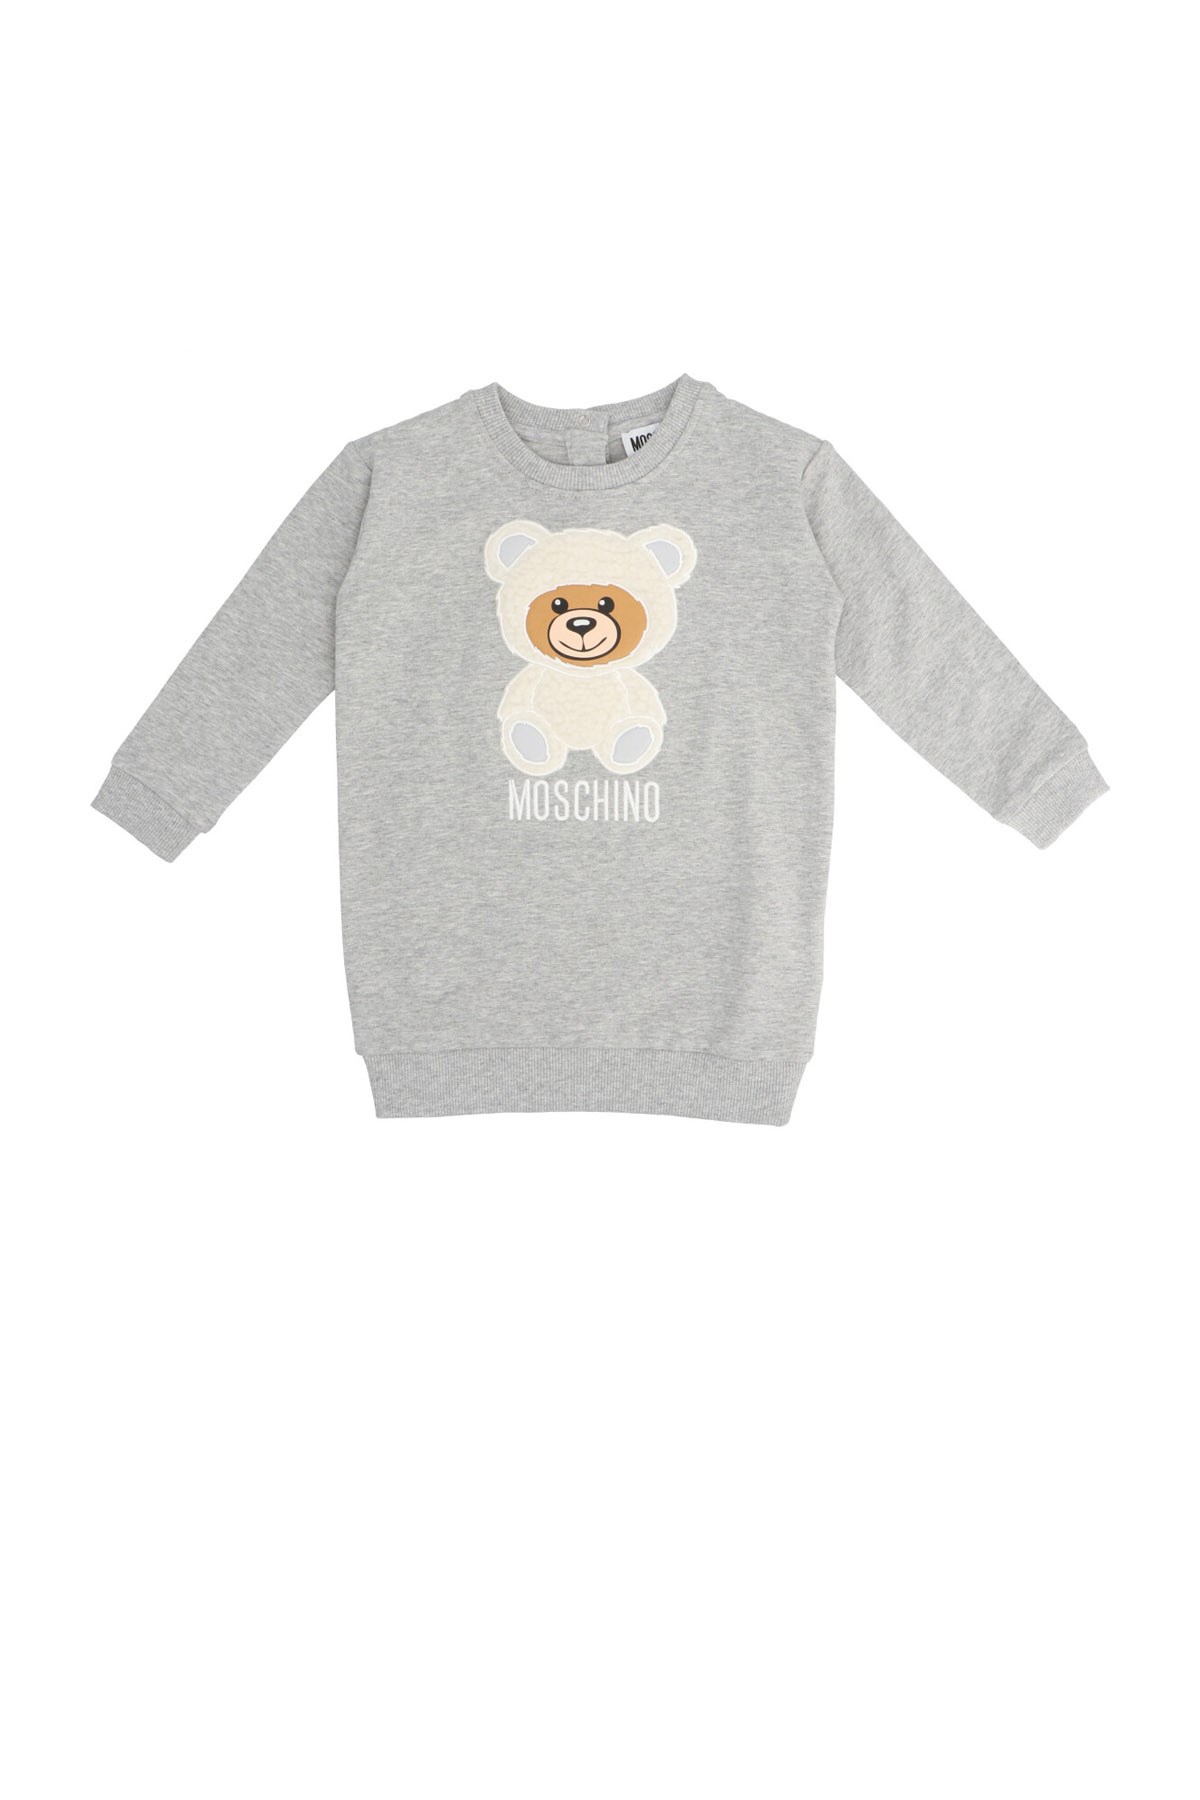 MOSCHINO BABY Teddy Embroidery Sweatshirt Dress